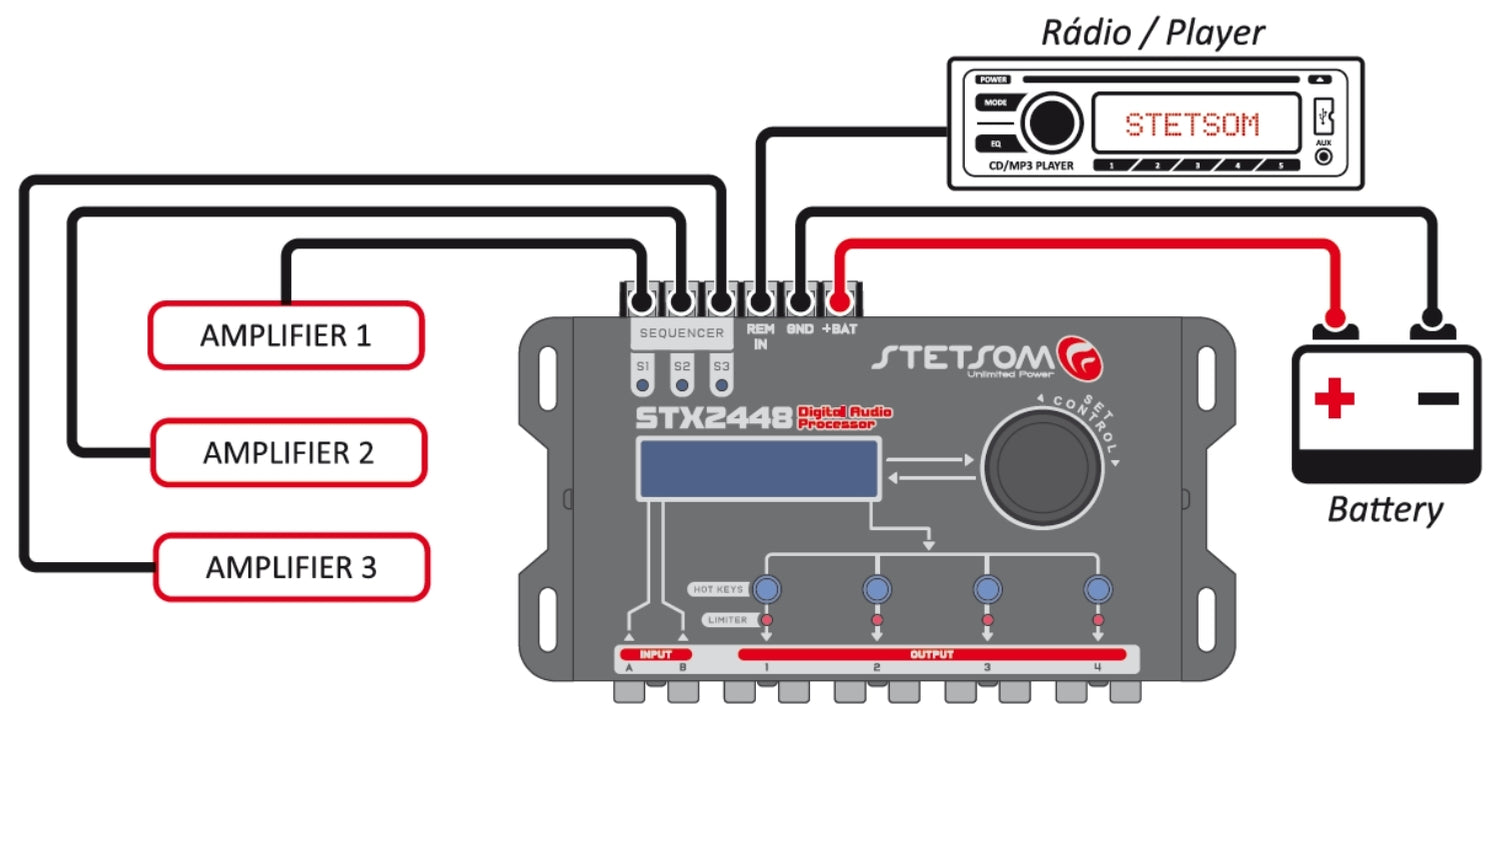 Stetsom STX 2448 DSP Crossover & Equalizer 4 Channel Full Digital Signal Processor (Sequencer)